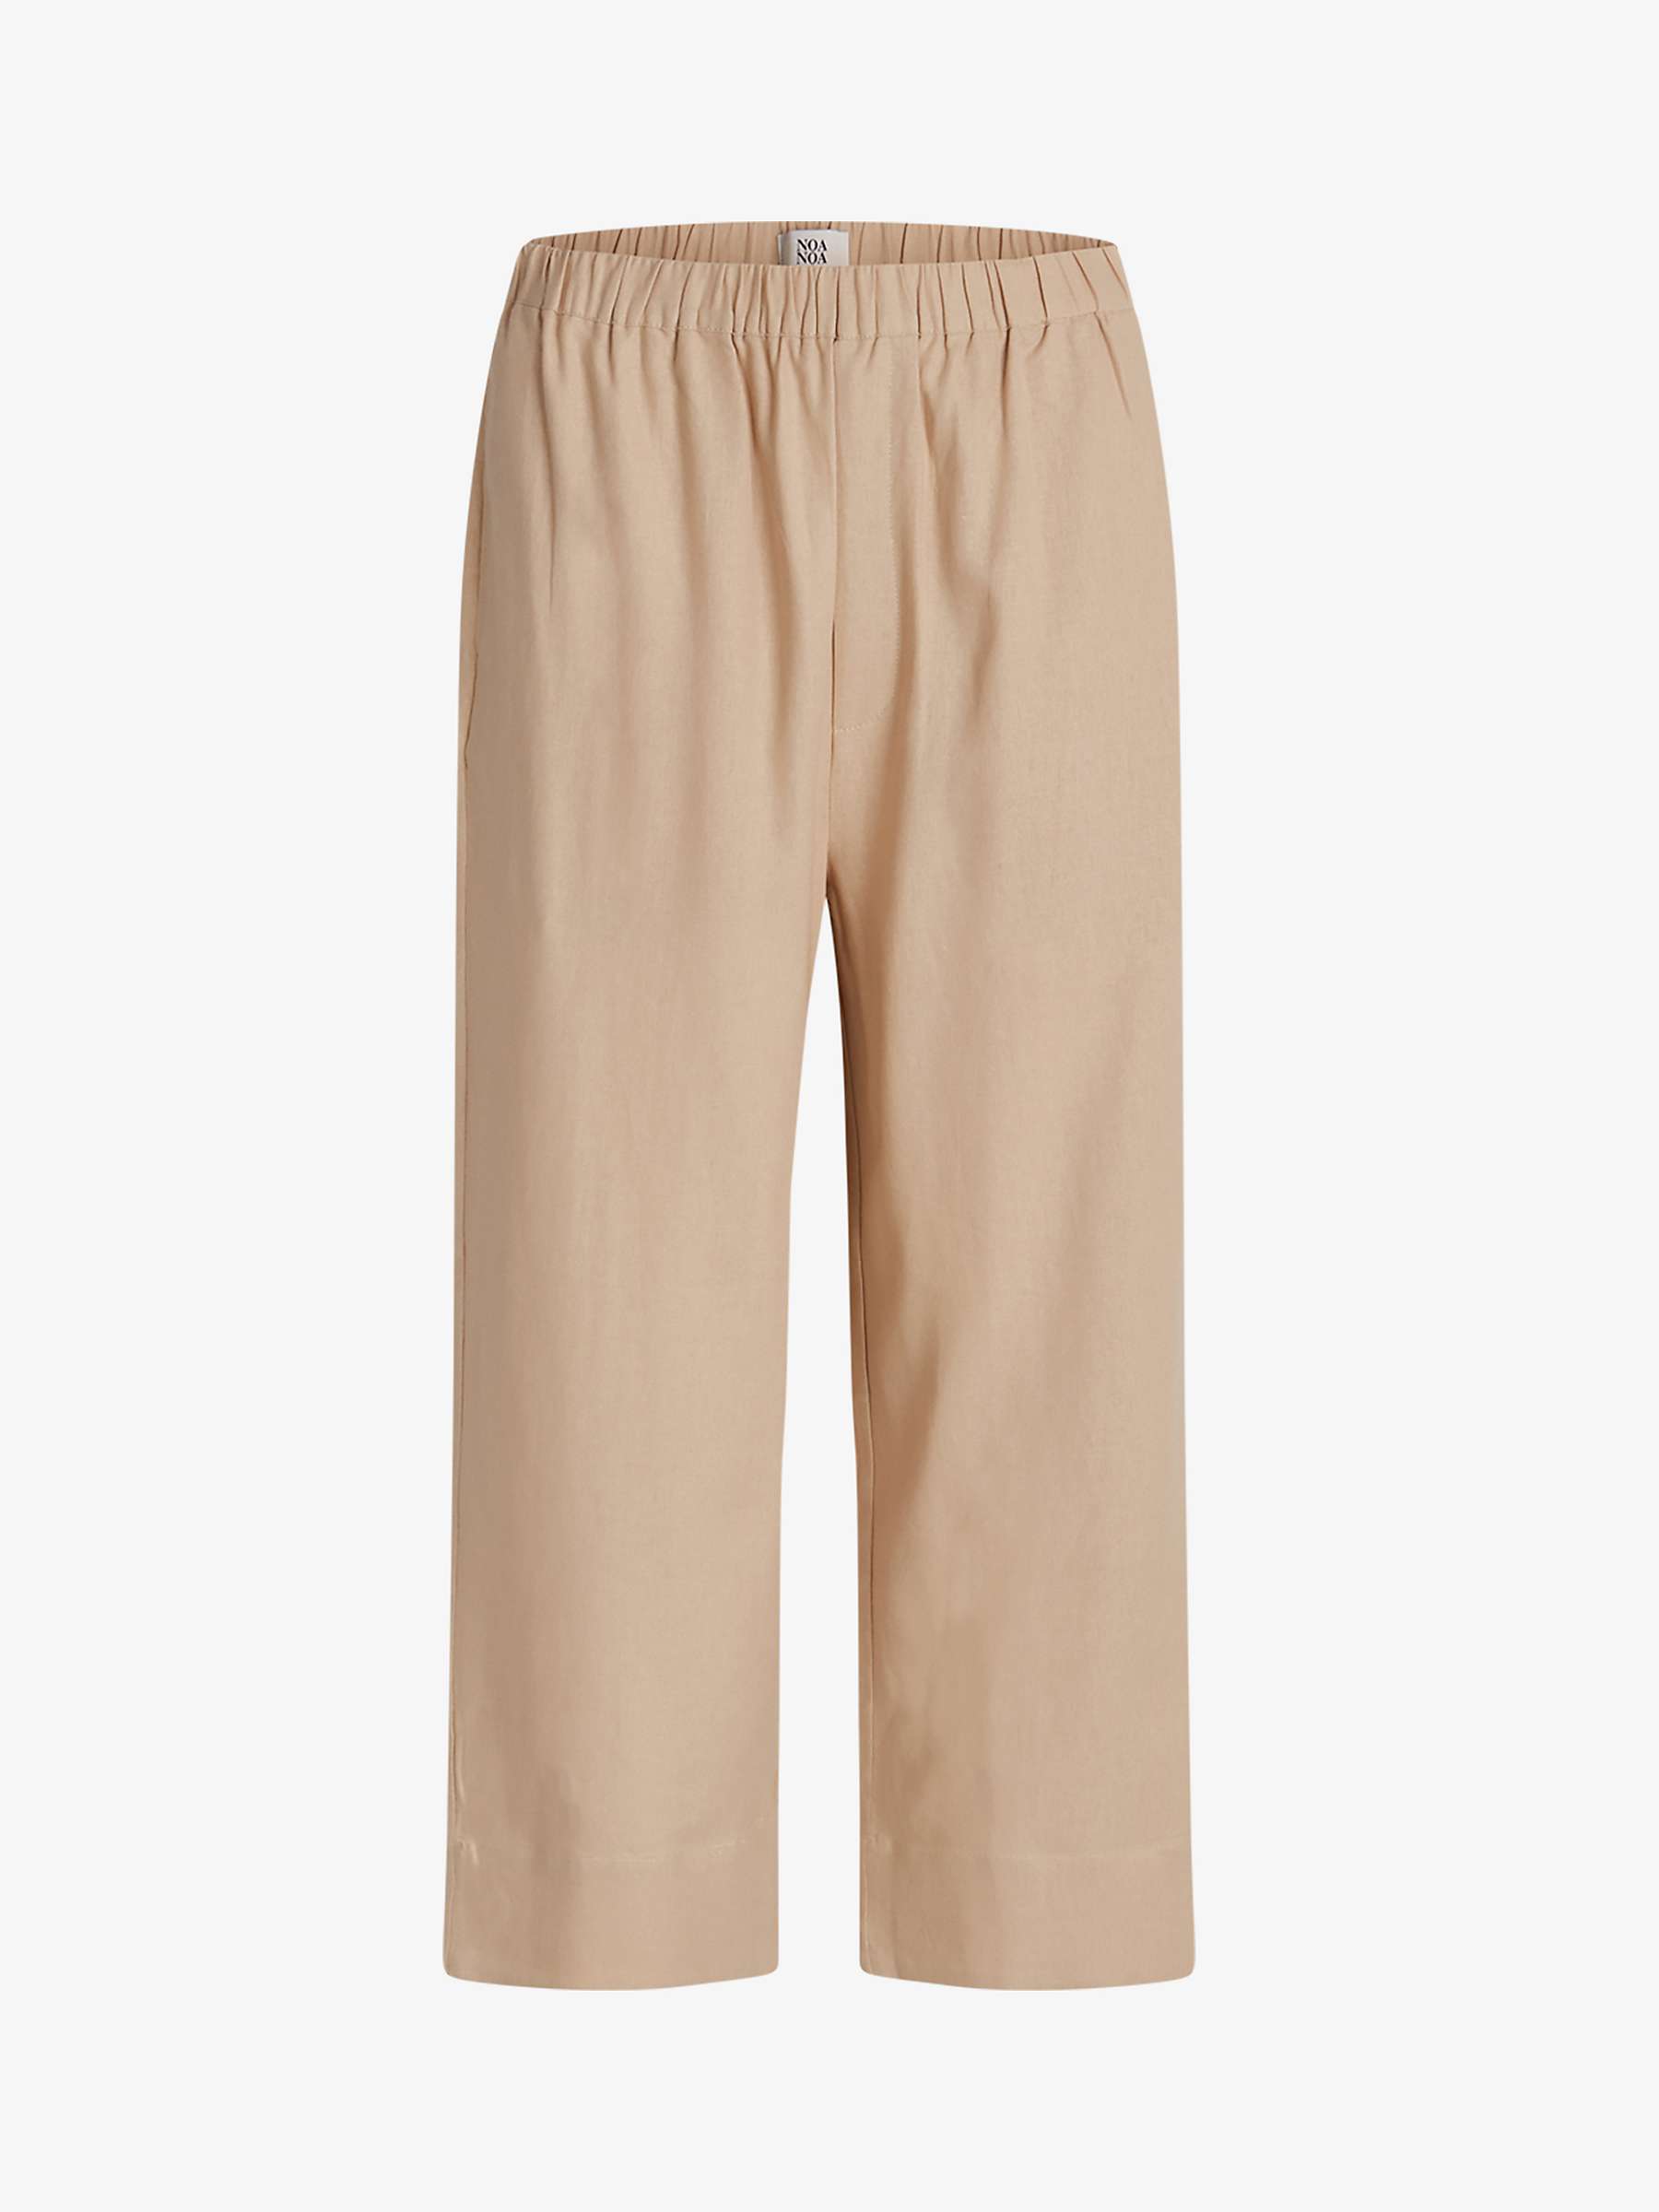 Buy Noa Noa Amira Cropped Linen Blend Trousers Online at johnlewis.com